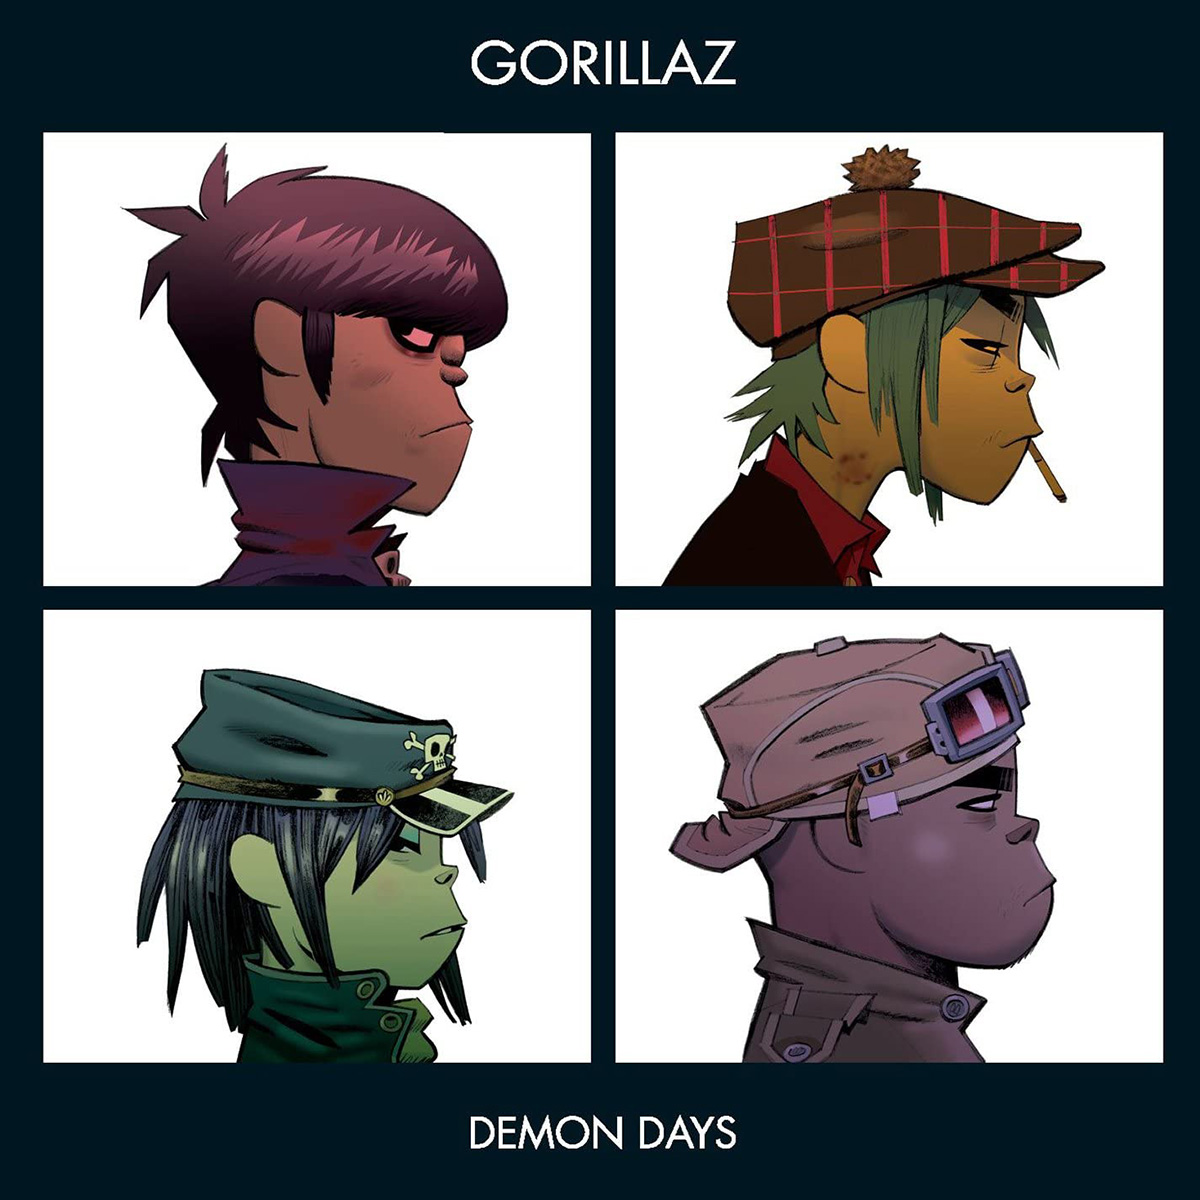 Demon Dayz Gorillaz Album cover